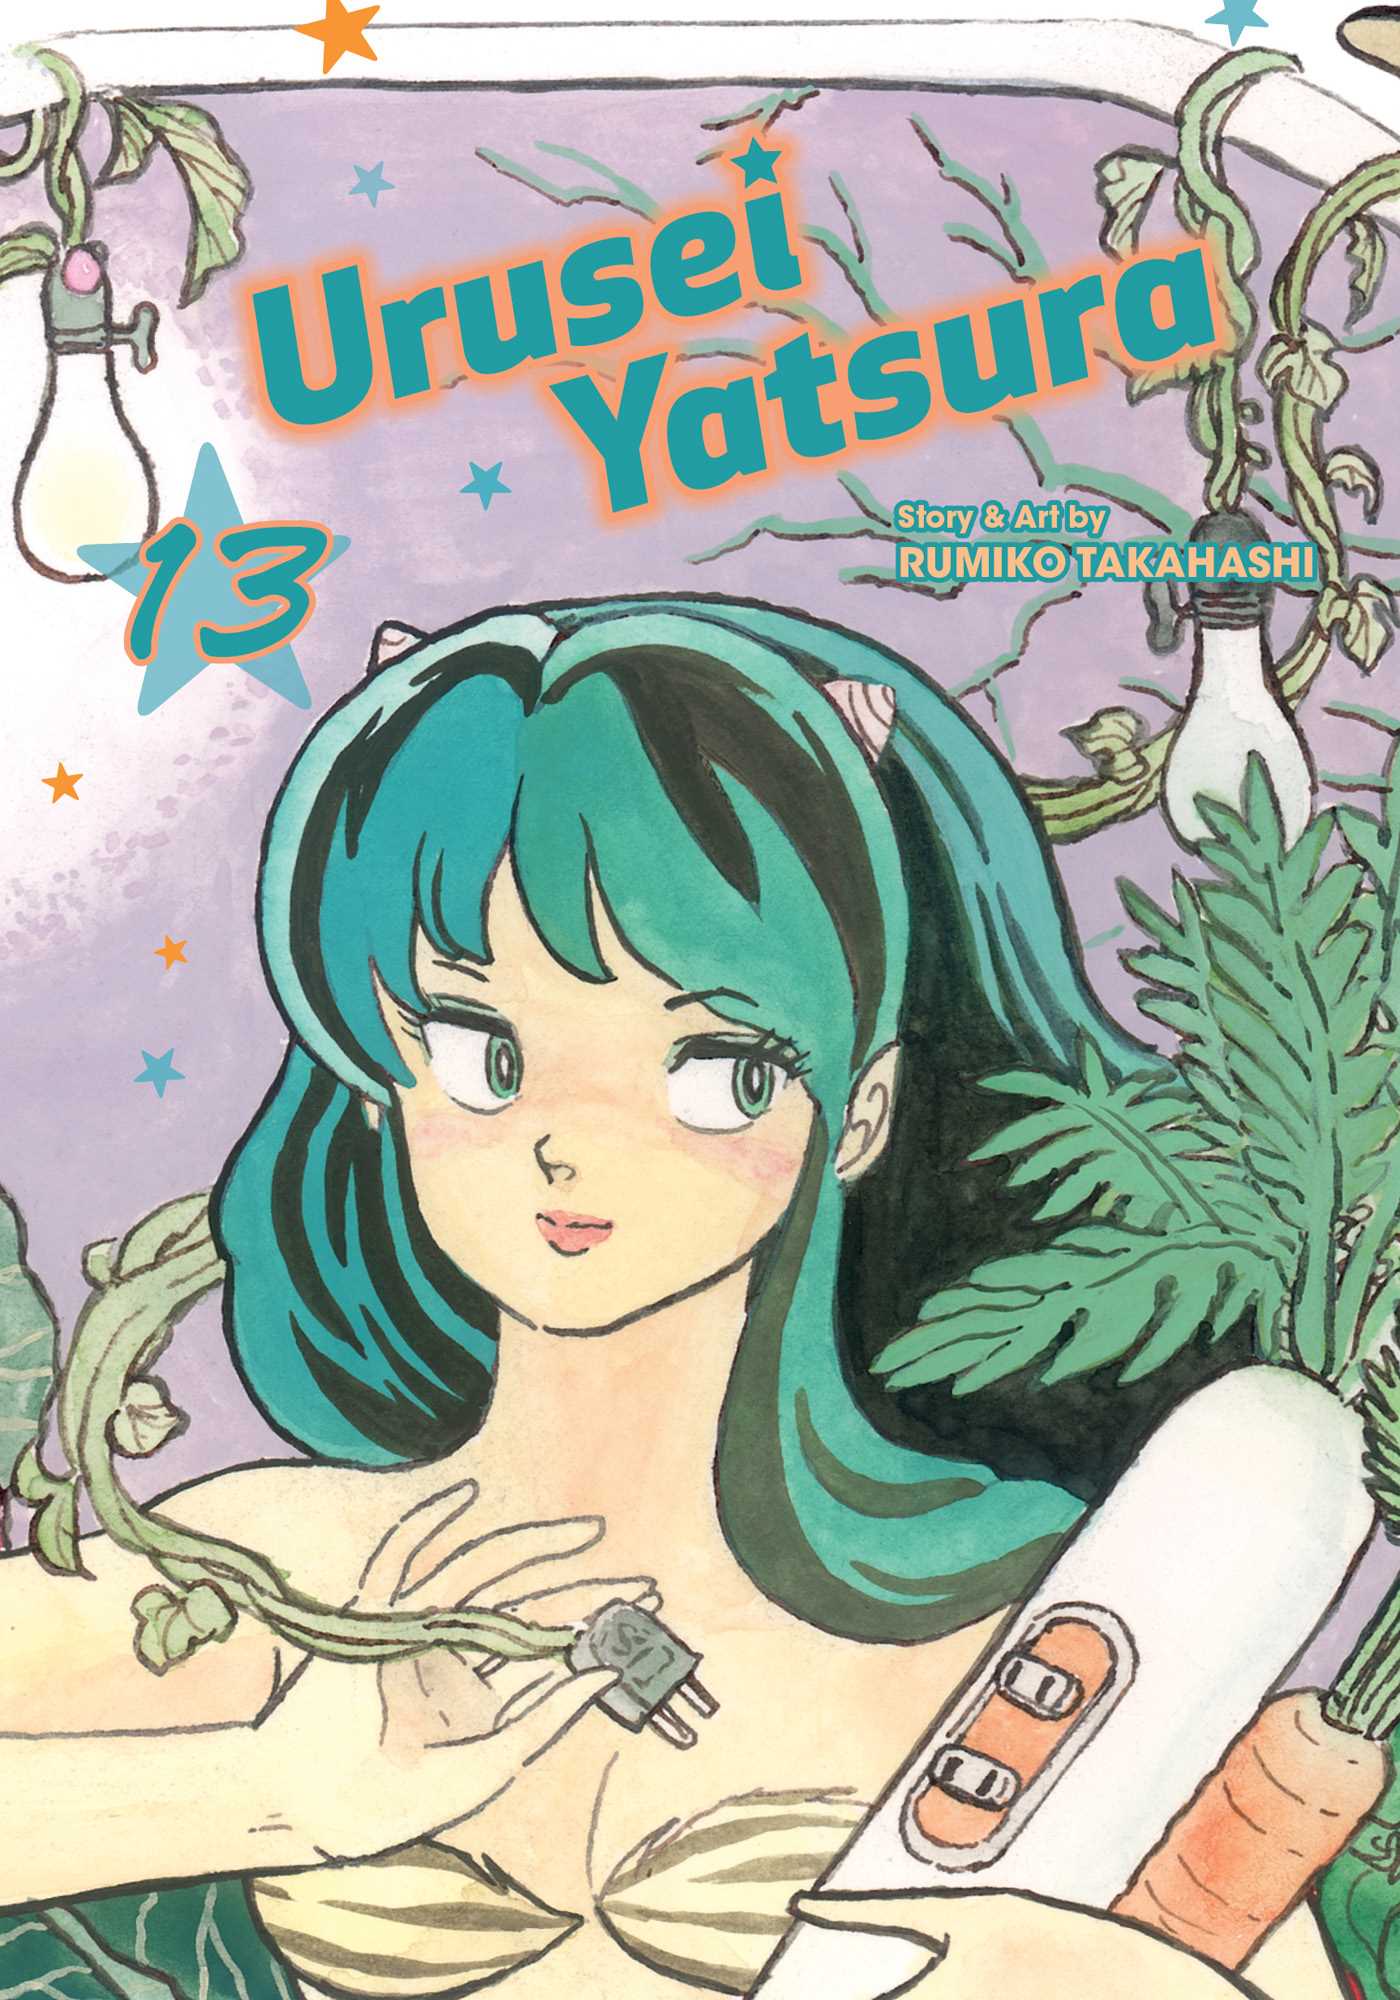 Urusei Yatsura, vol. 13 mangas